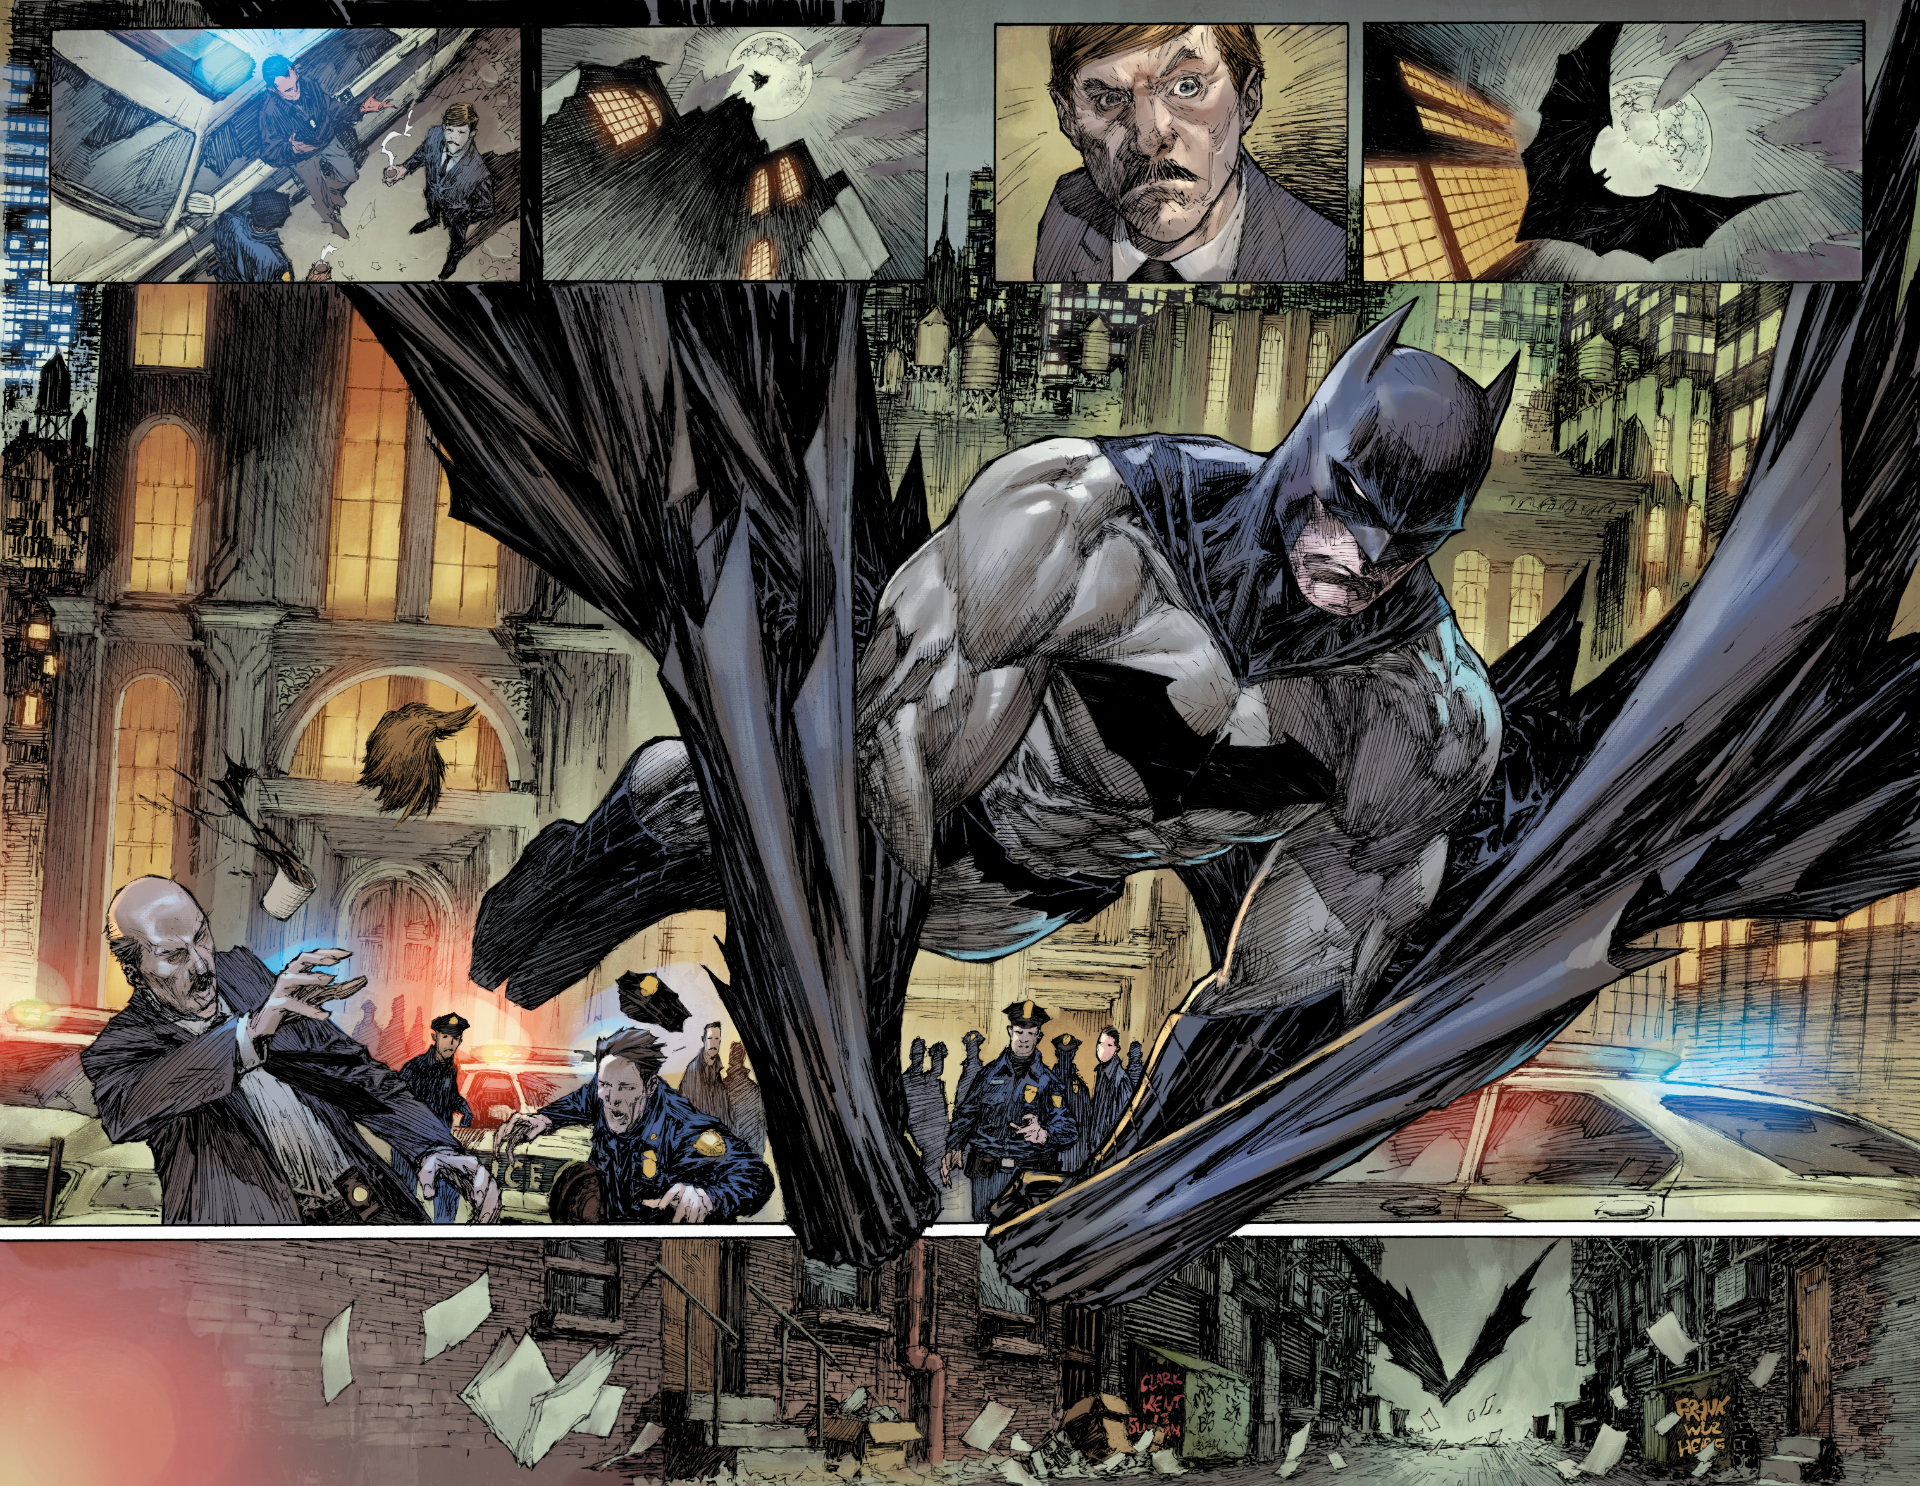 Preview - Marc Silvestri's Batman/Joker: The Deadly Duo #1 | GamesRadar+